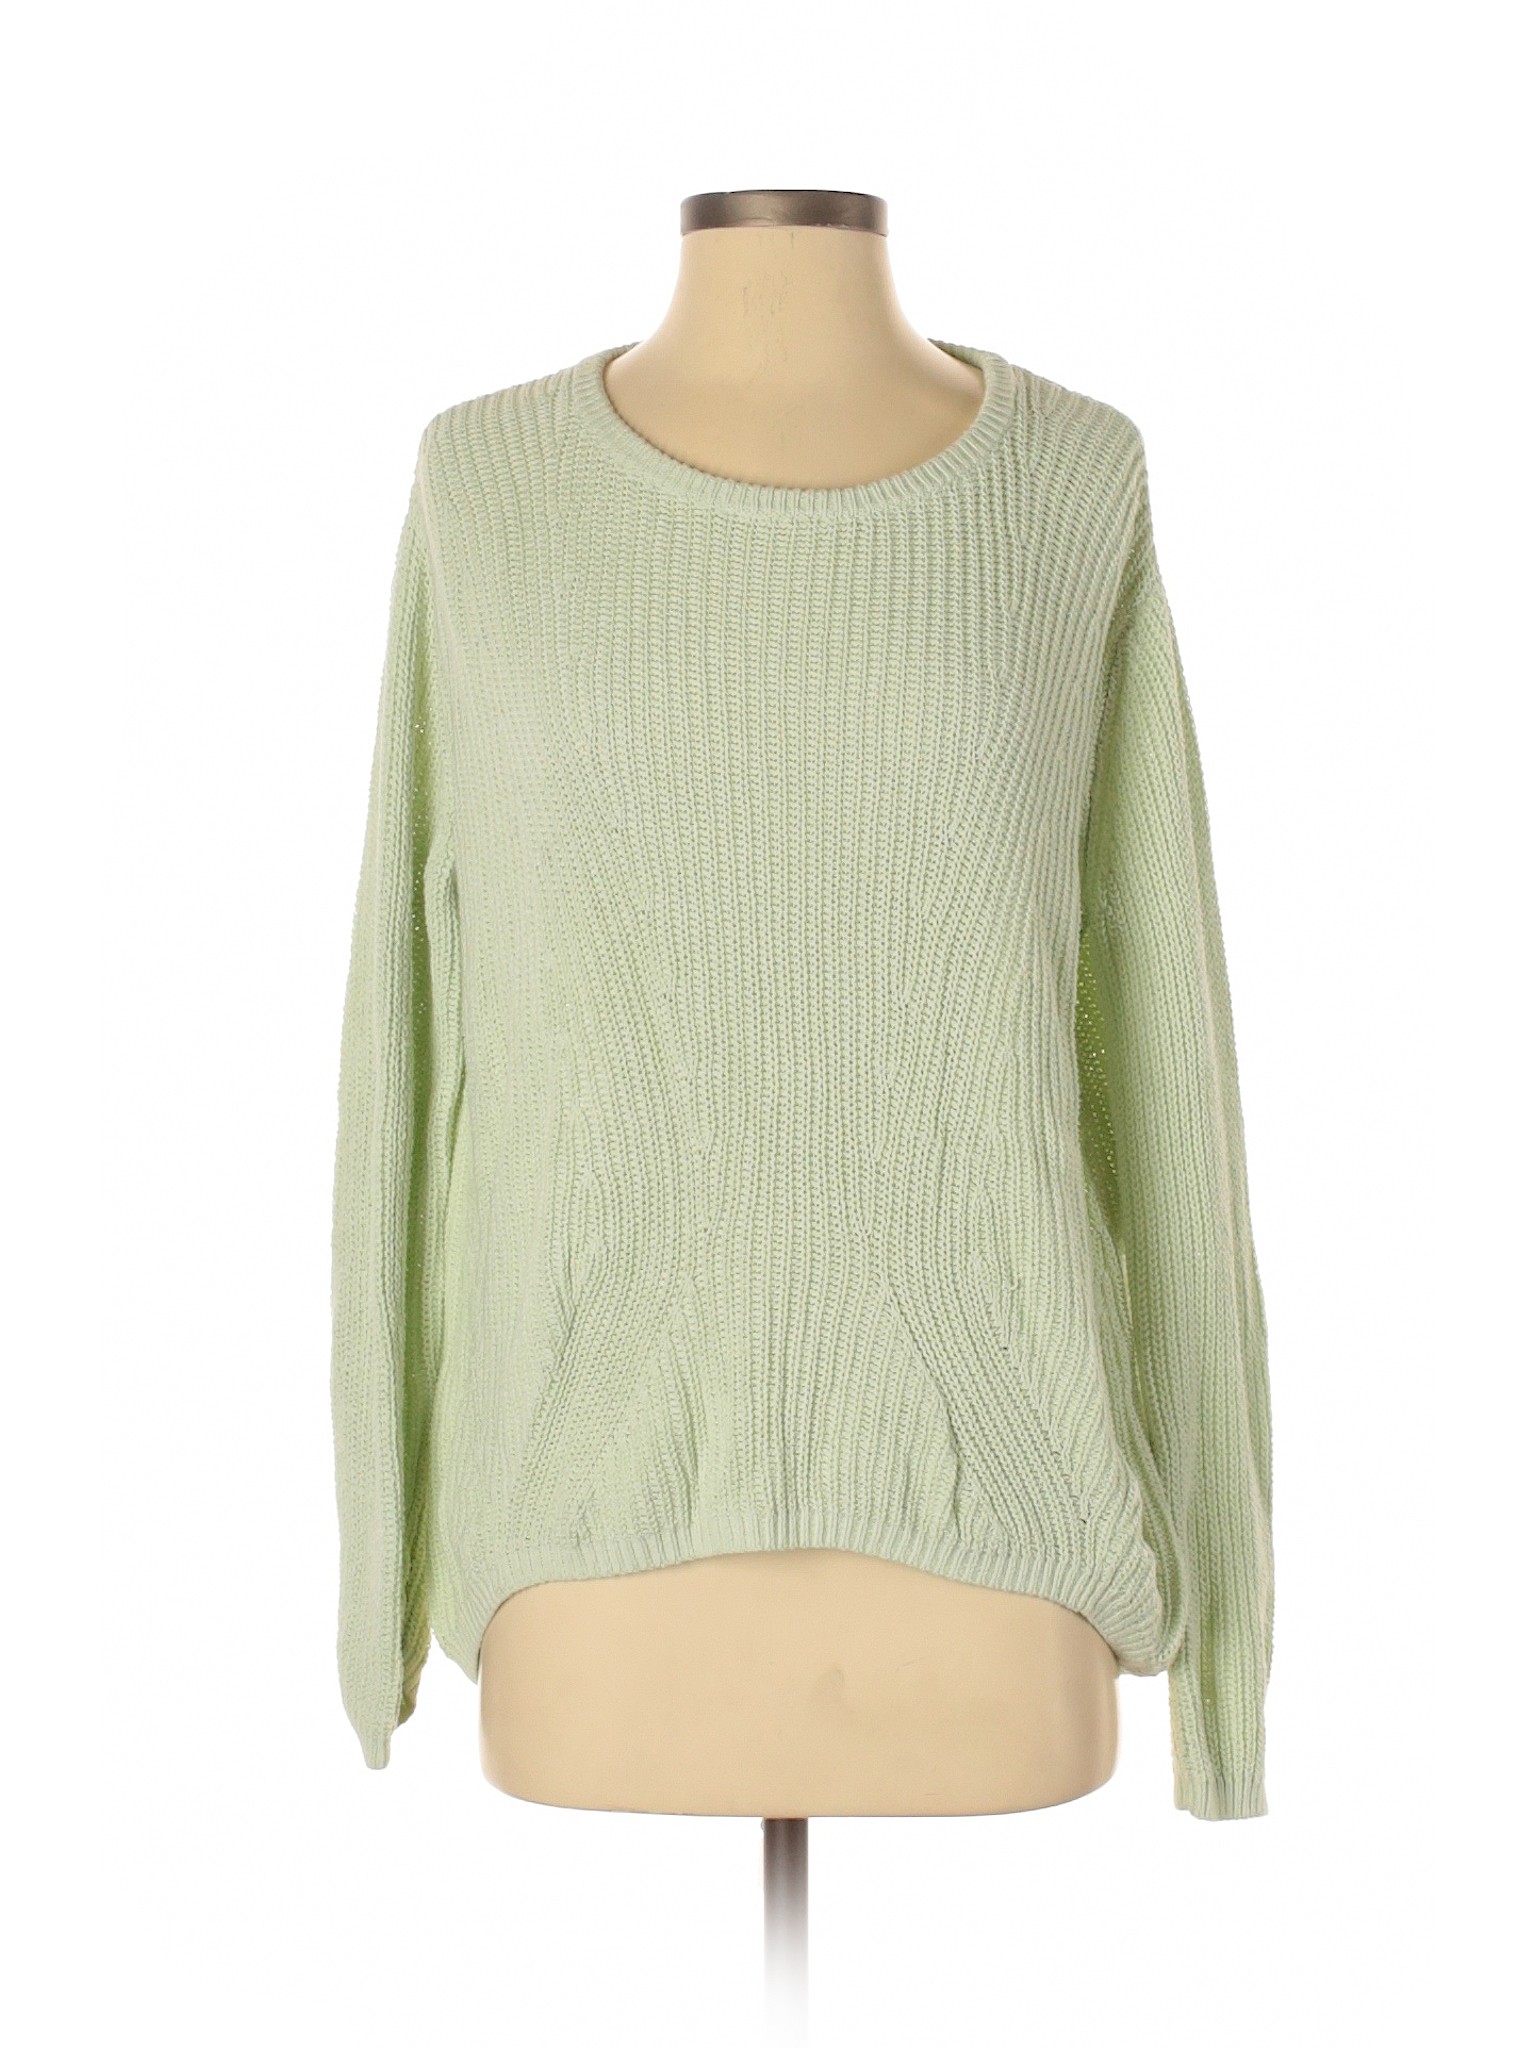 Banana Republic Factory Store Women Green Pullover Sweater XS | eBay